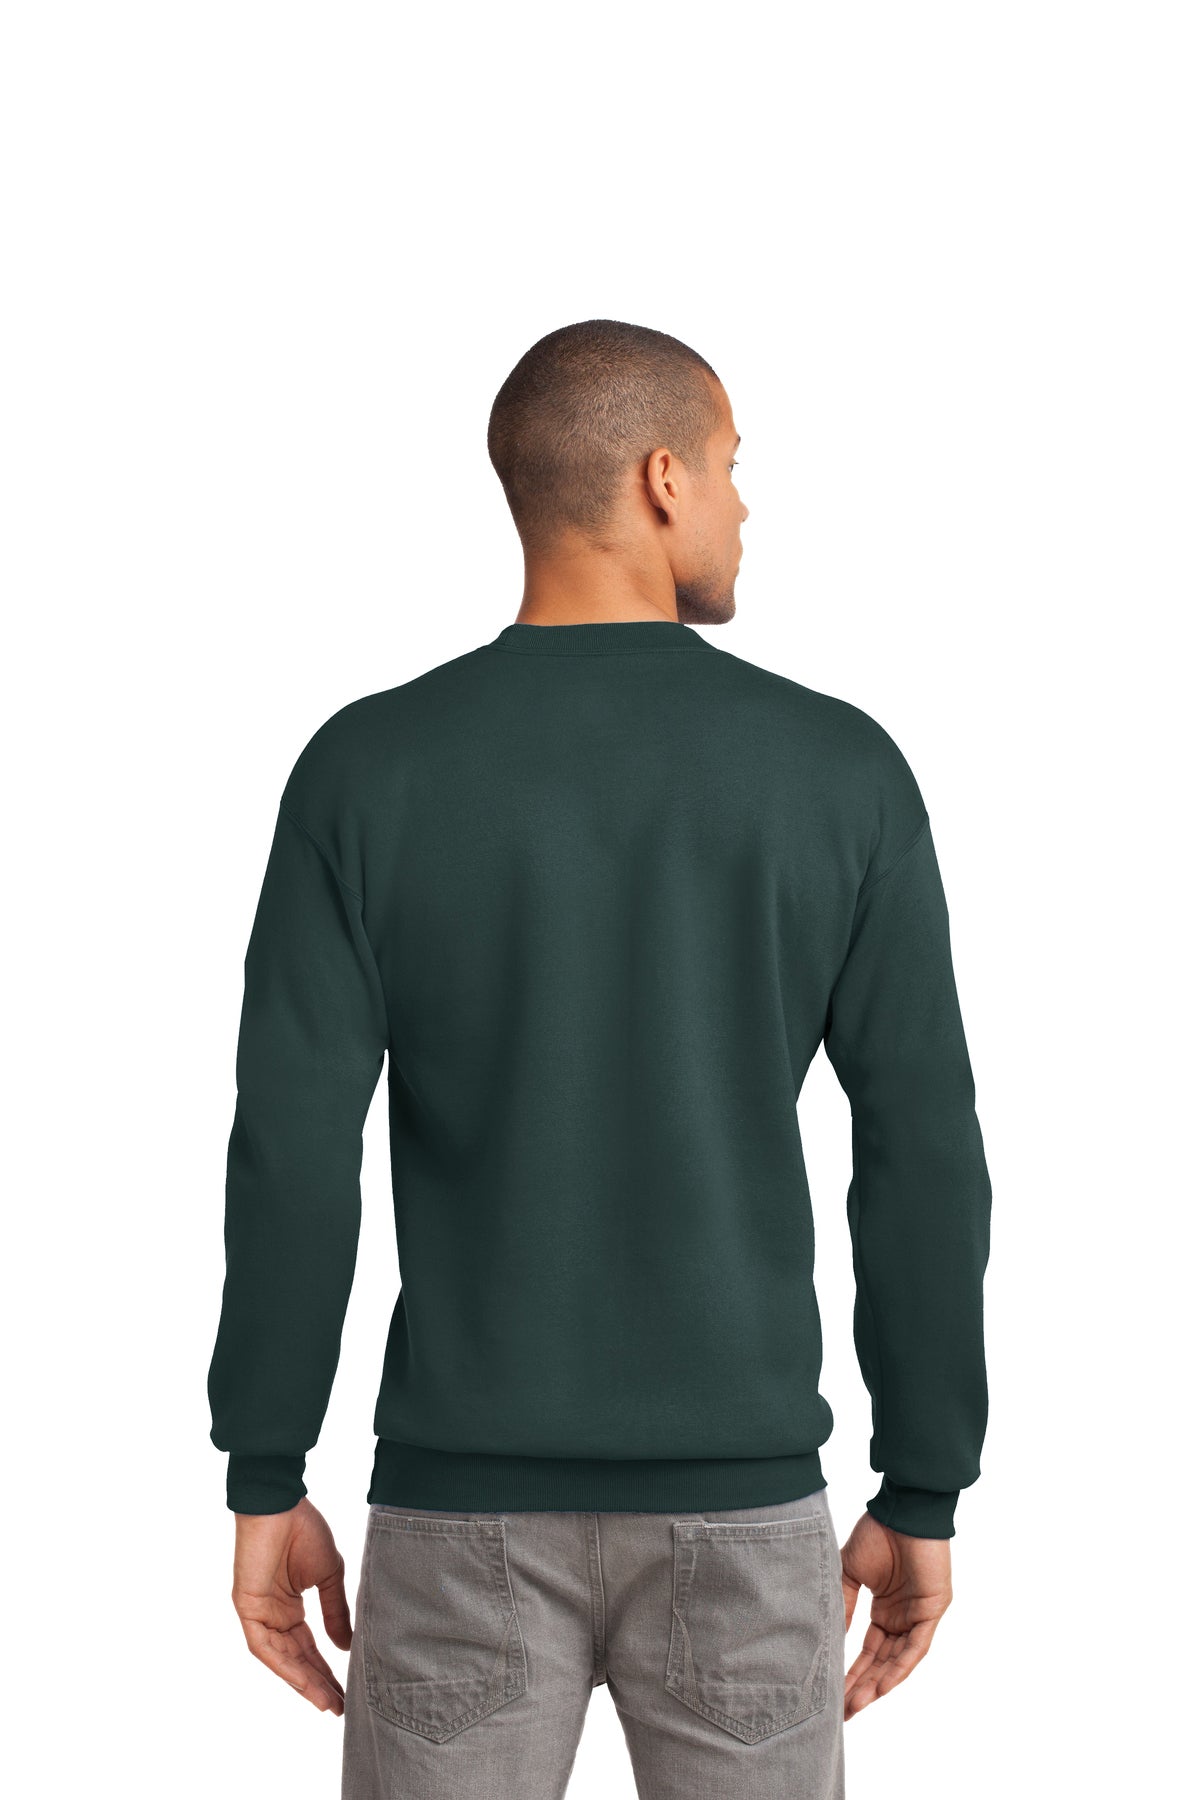 port & company_pc90t _dark green_company_logo_sweatshirts